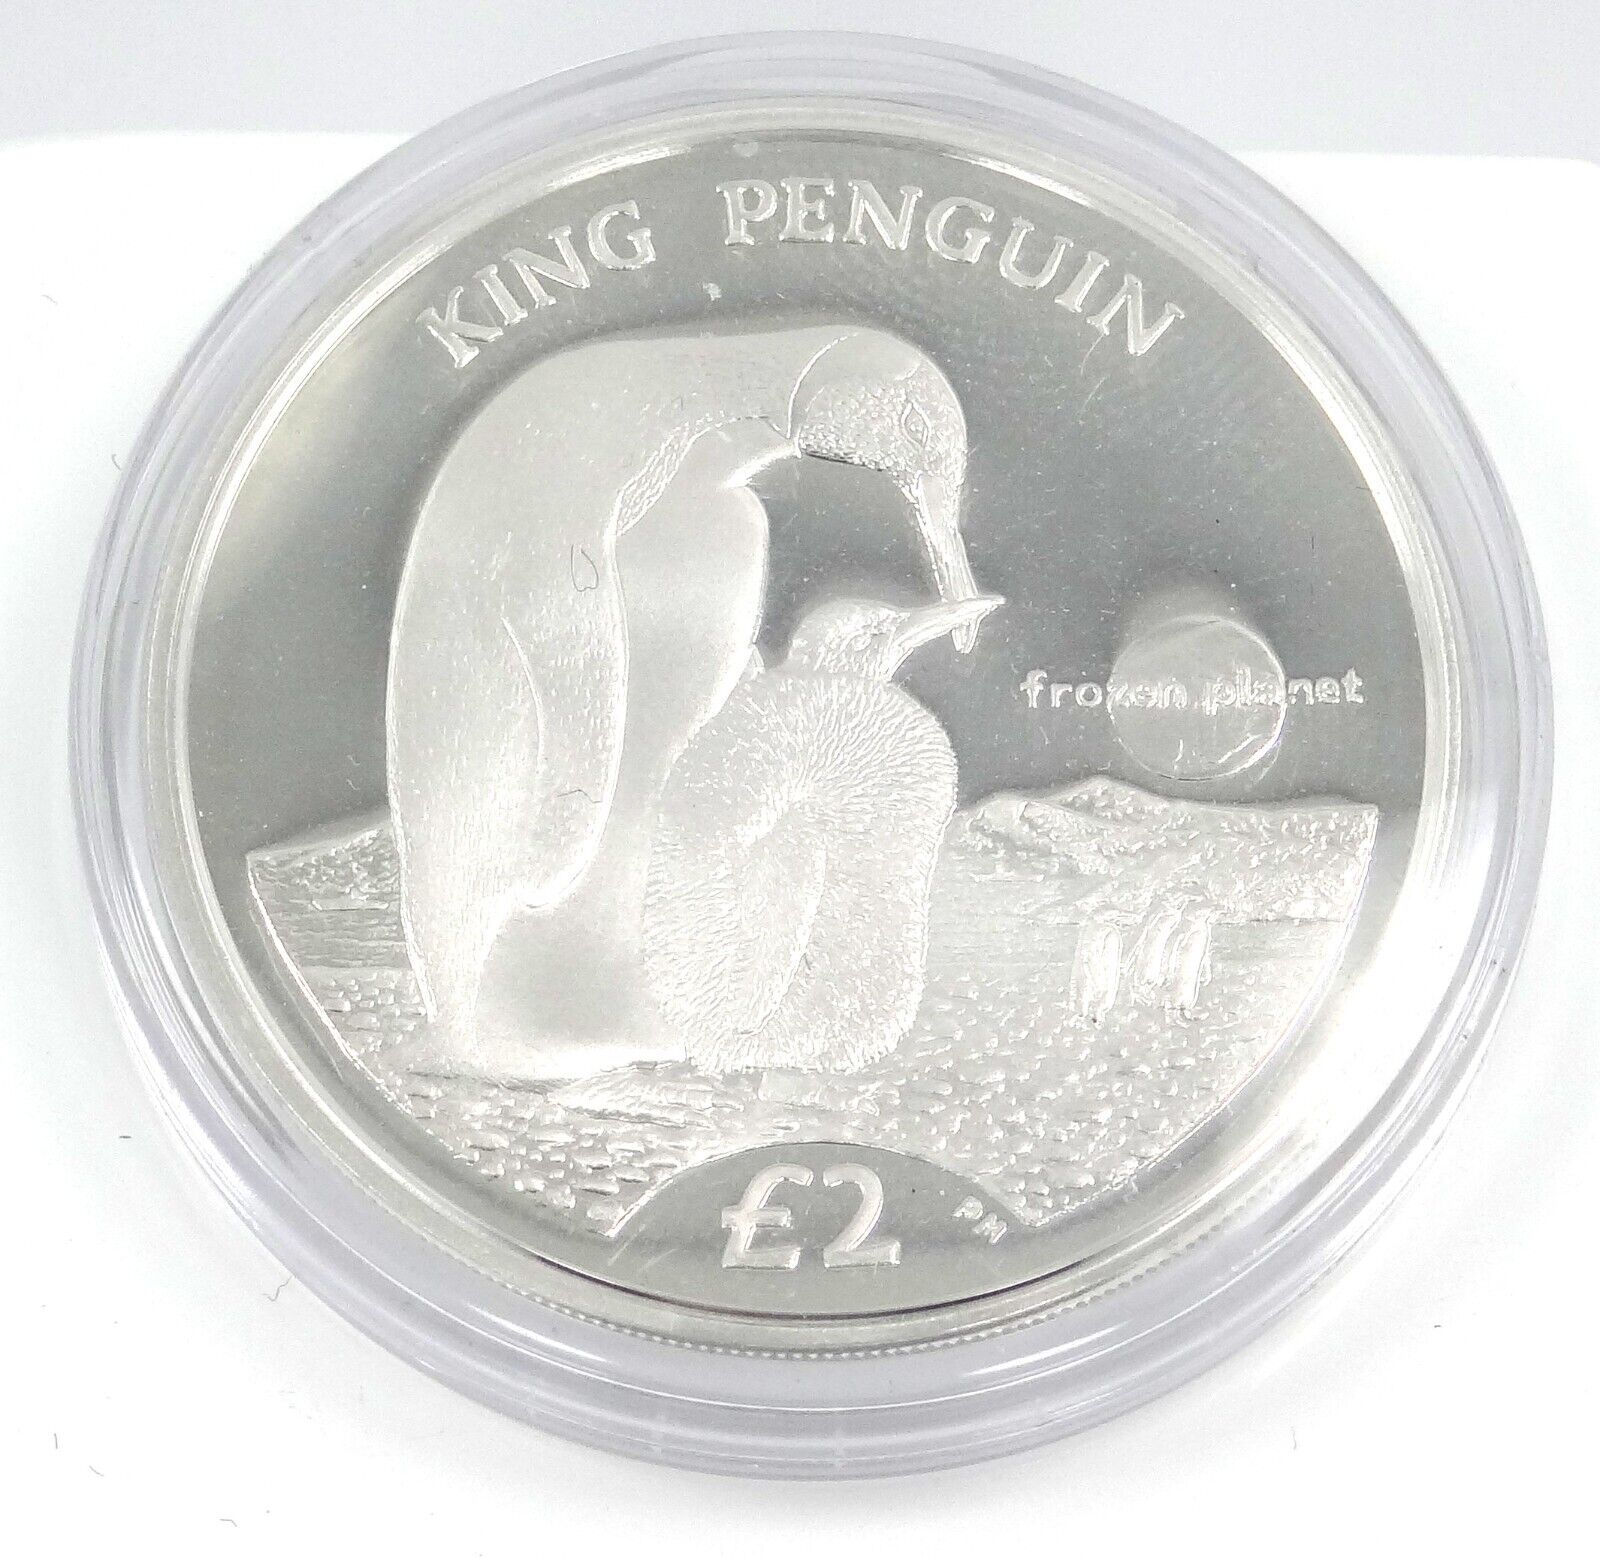 28.28g Silver Coin 2012 South Georgia Sandwich Islands King Penguin Pobjoy Mint-classypw.com-1